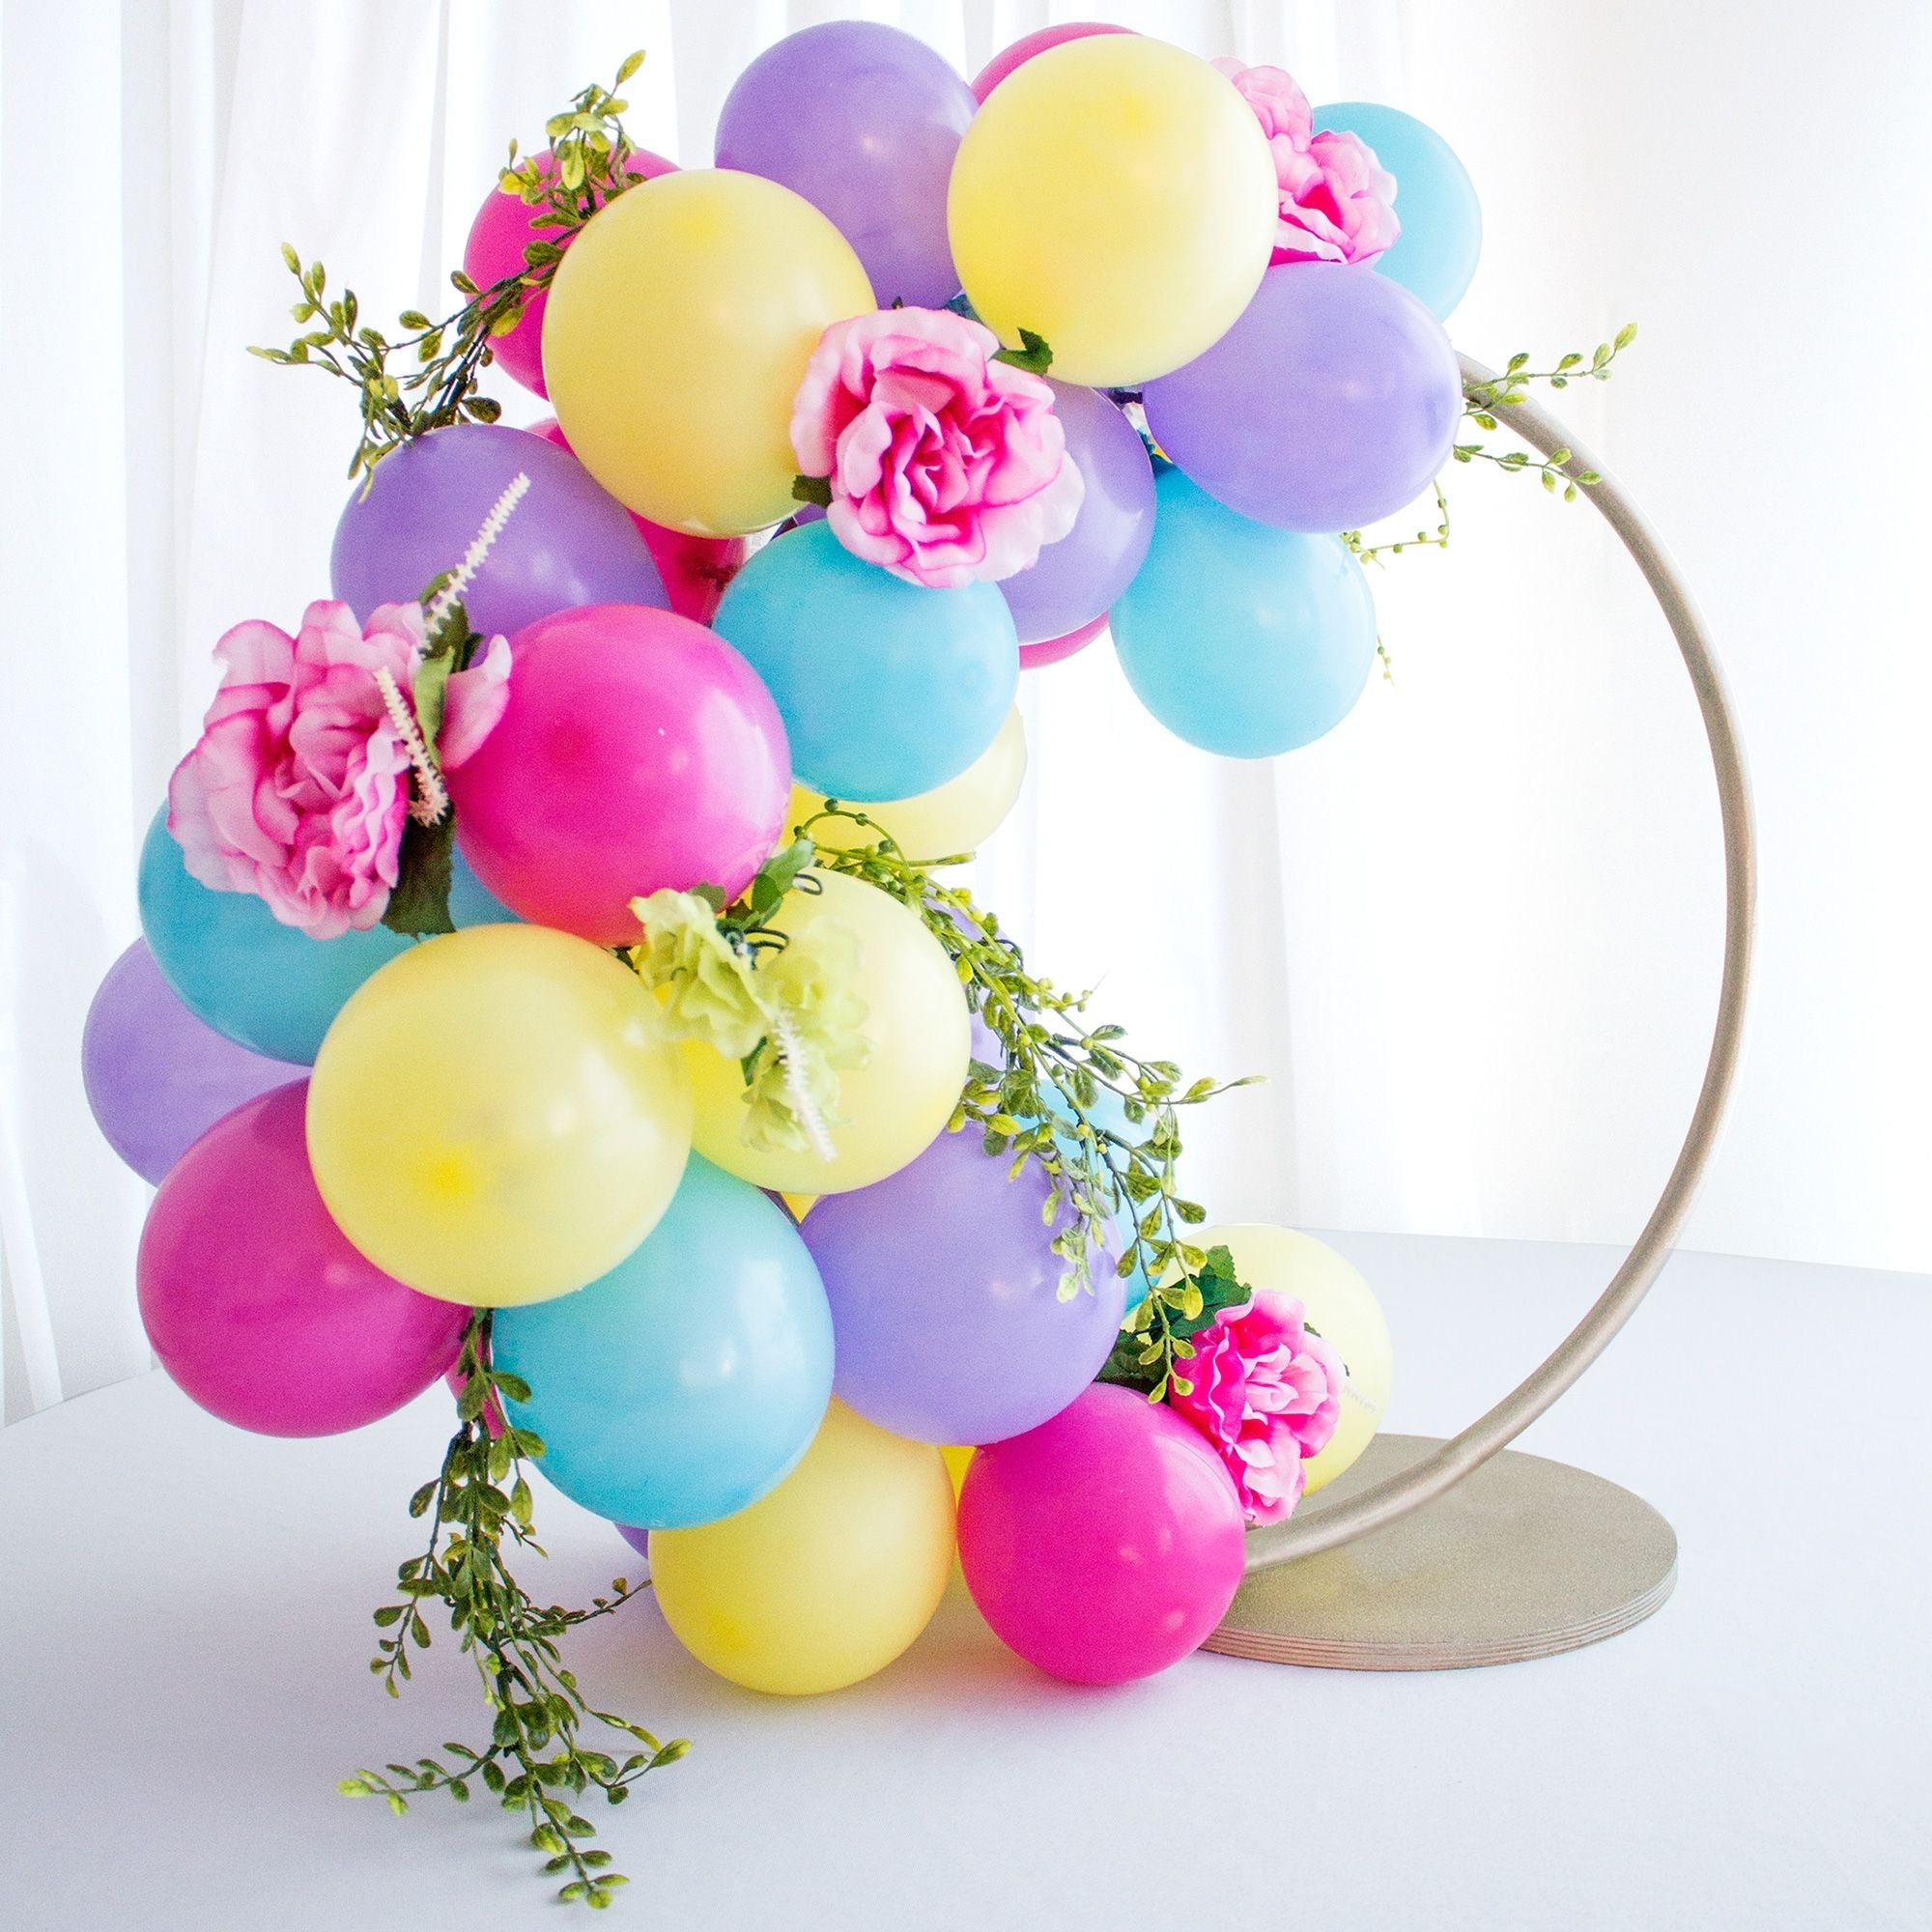 DIY Balloon Hoop Centerpiece with Flowers